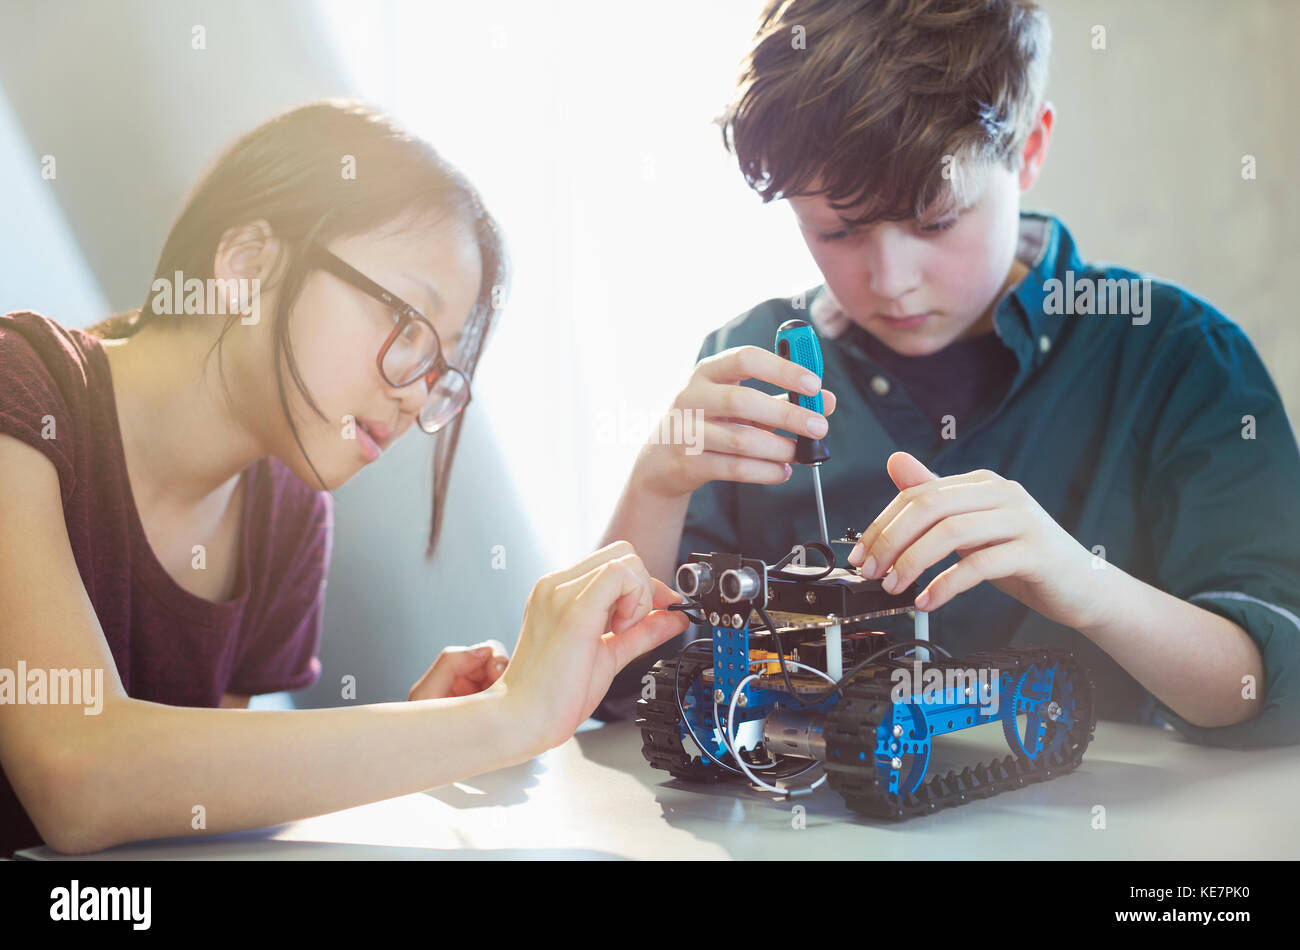 Students assembling robotics in classroom Stock Photo